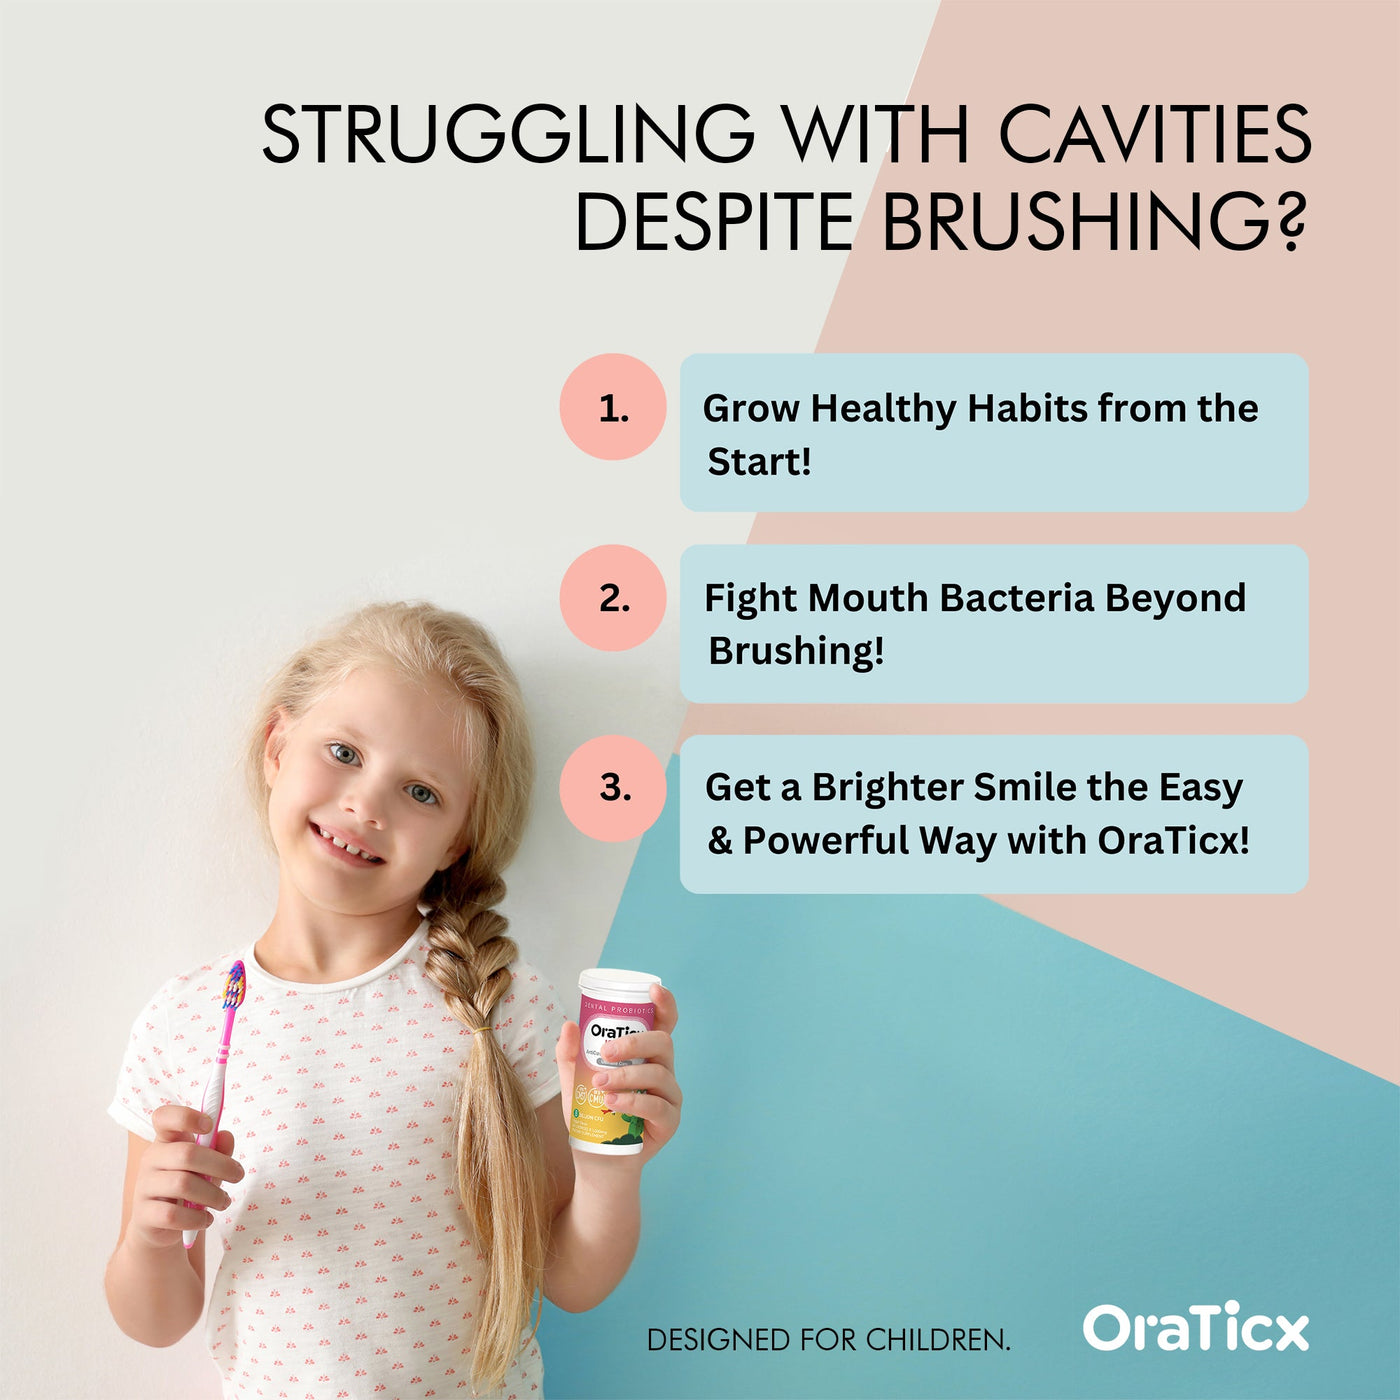 OraTicx Kids Dental Probiotic 3-Pack